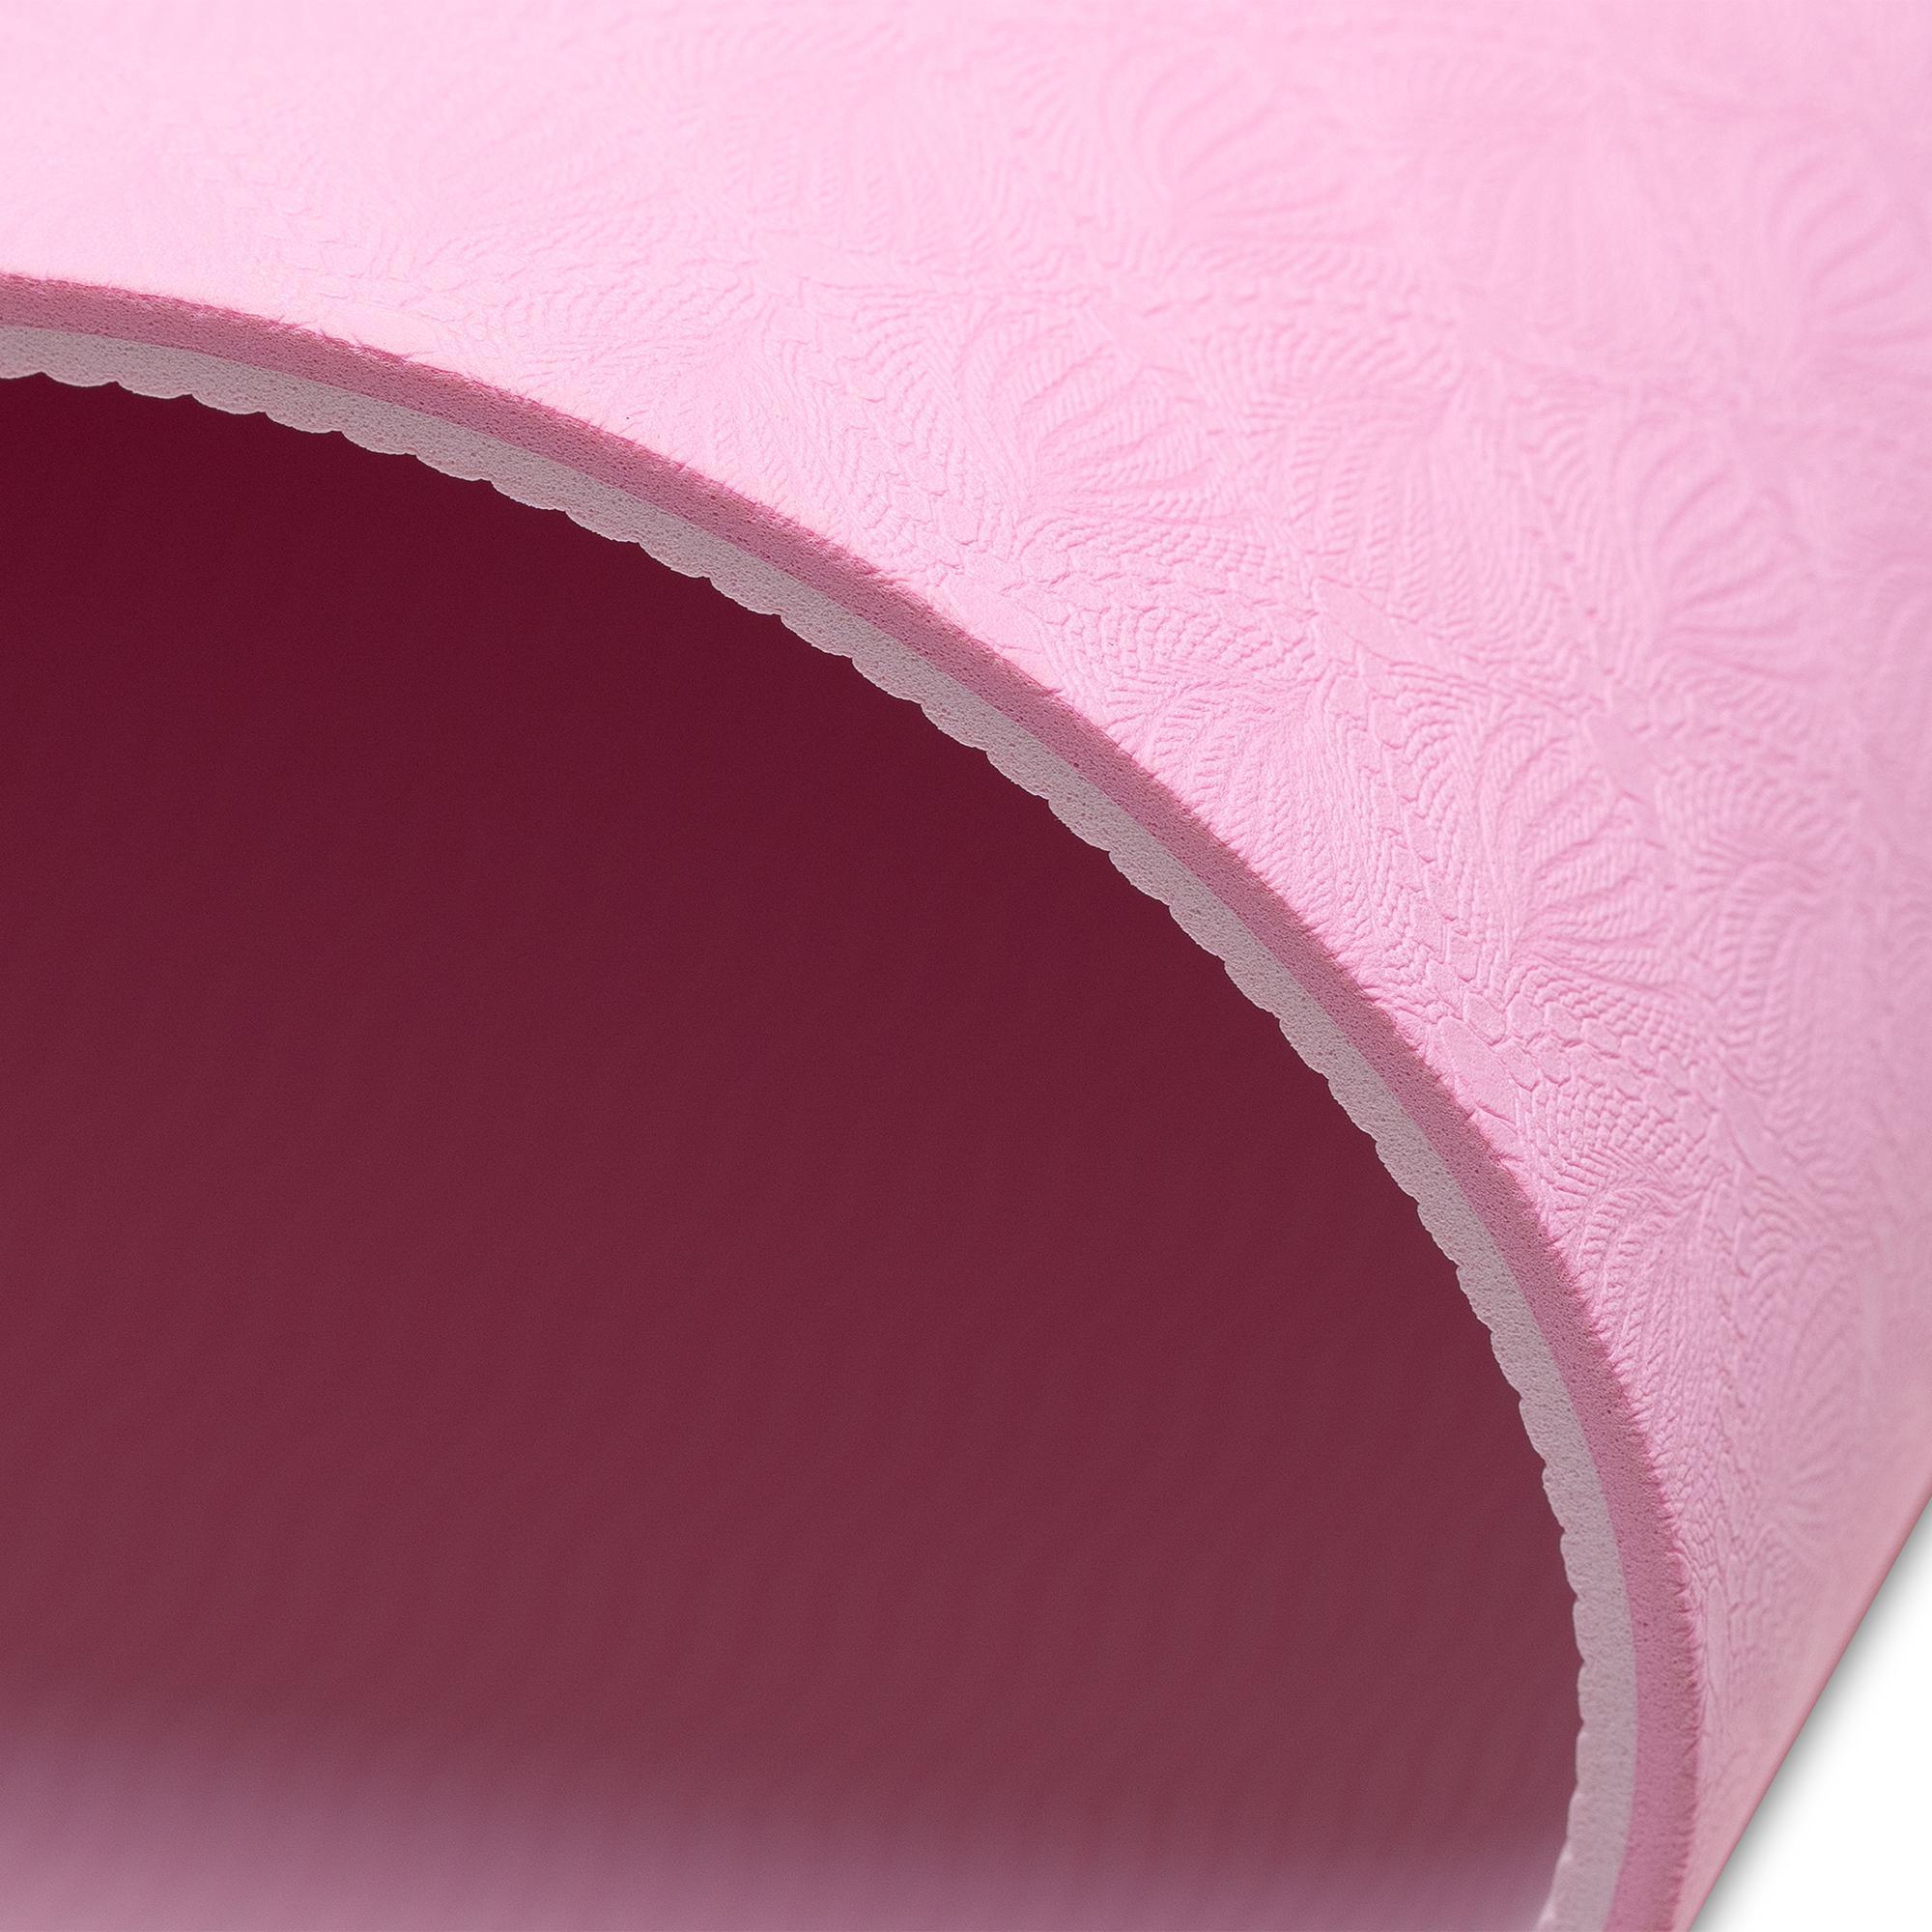 Flow Yoga Mat Pure Mandala Rose 6mm - Ideal Mat For Beginners for Yoga  Sessions